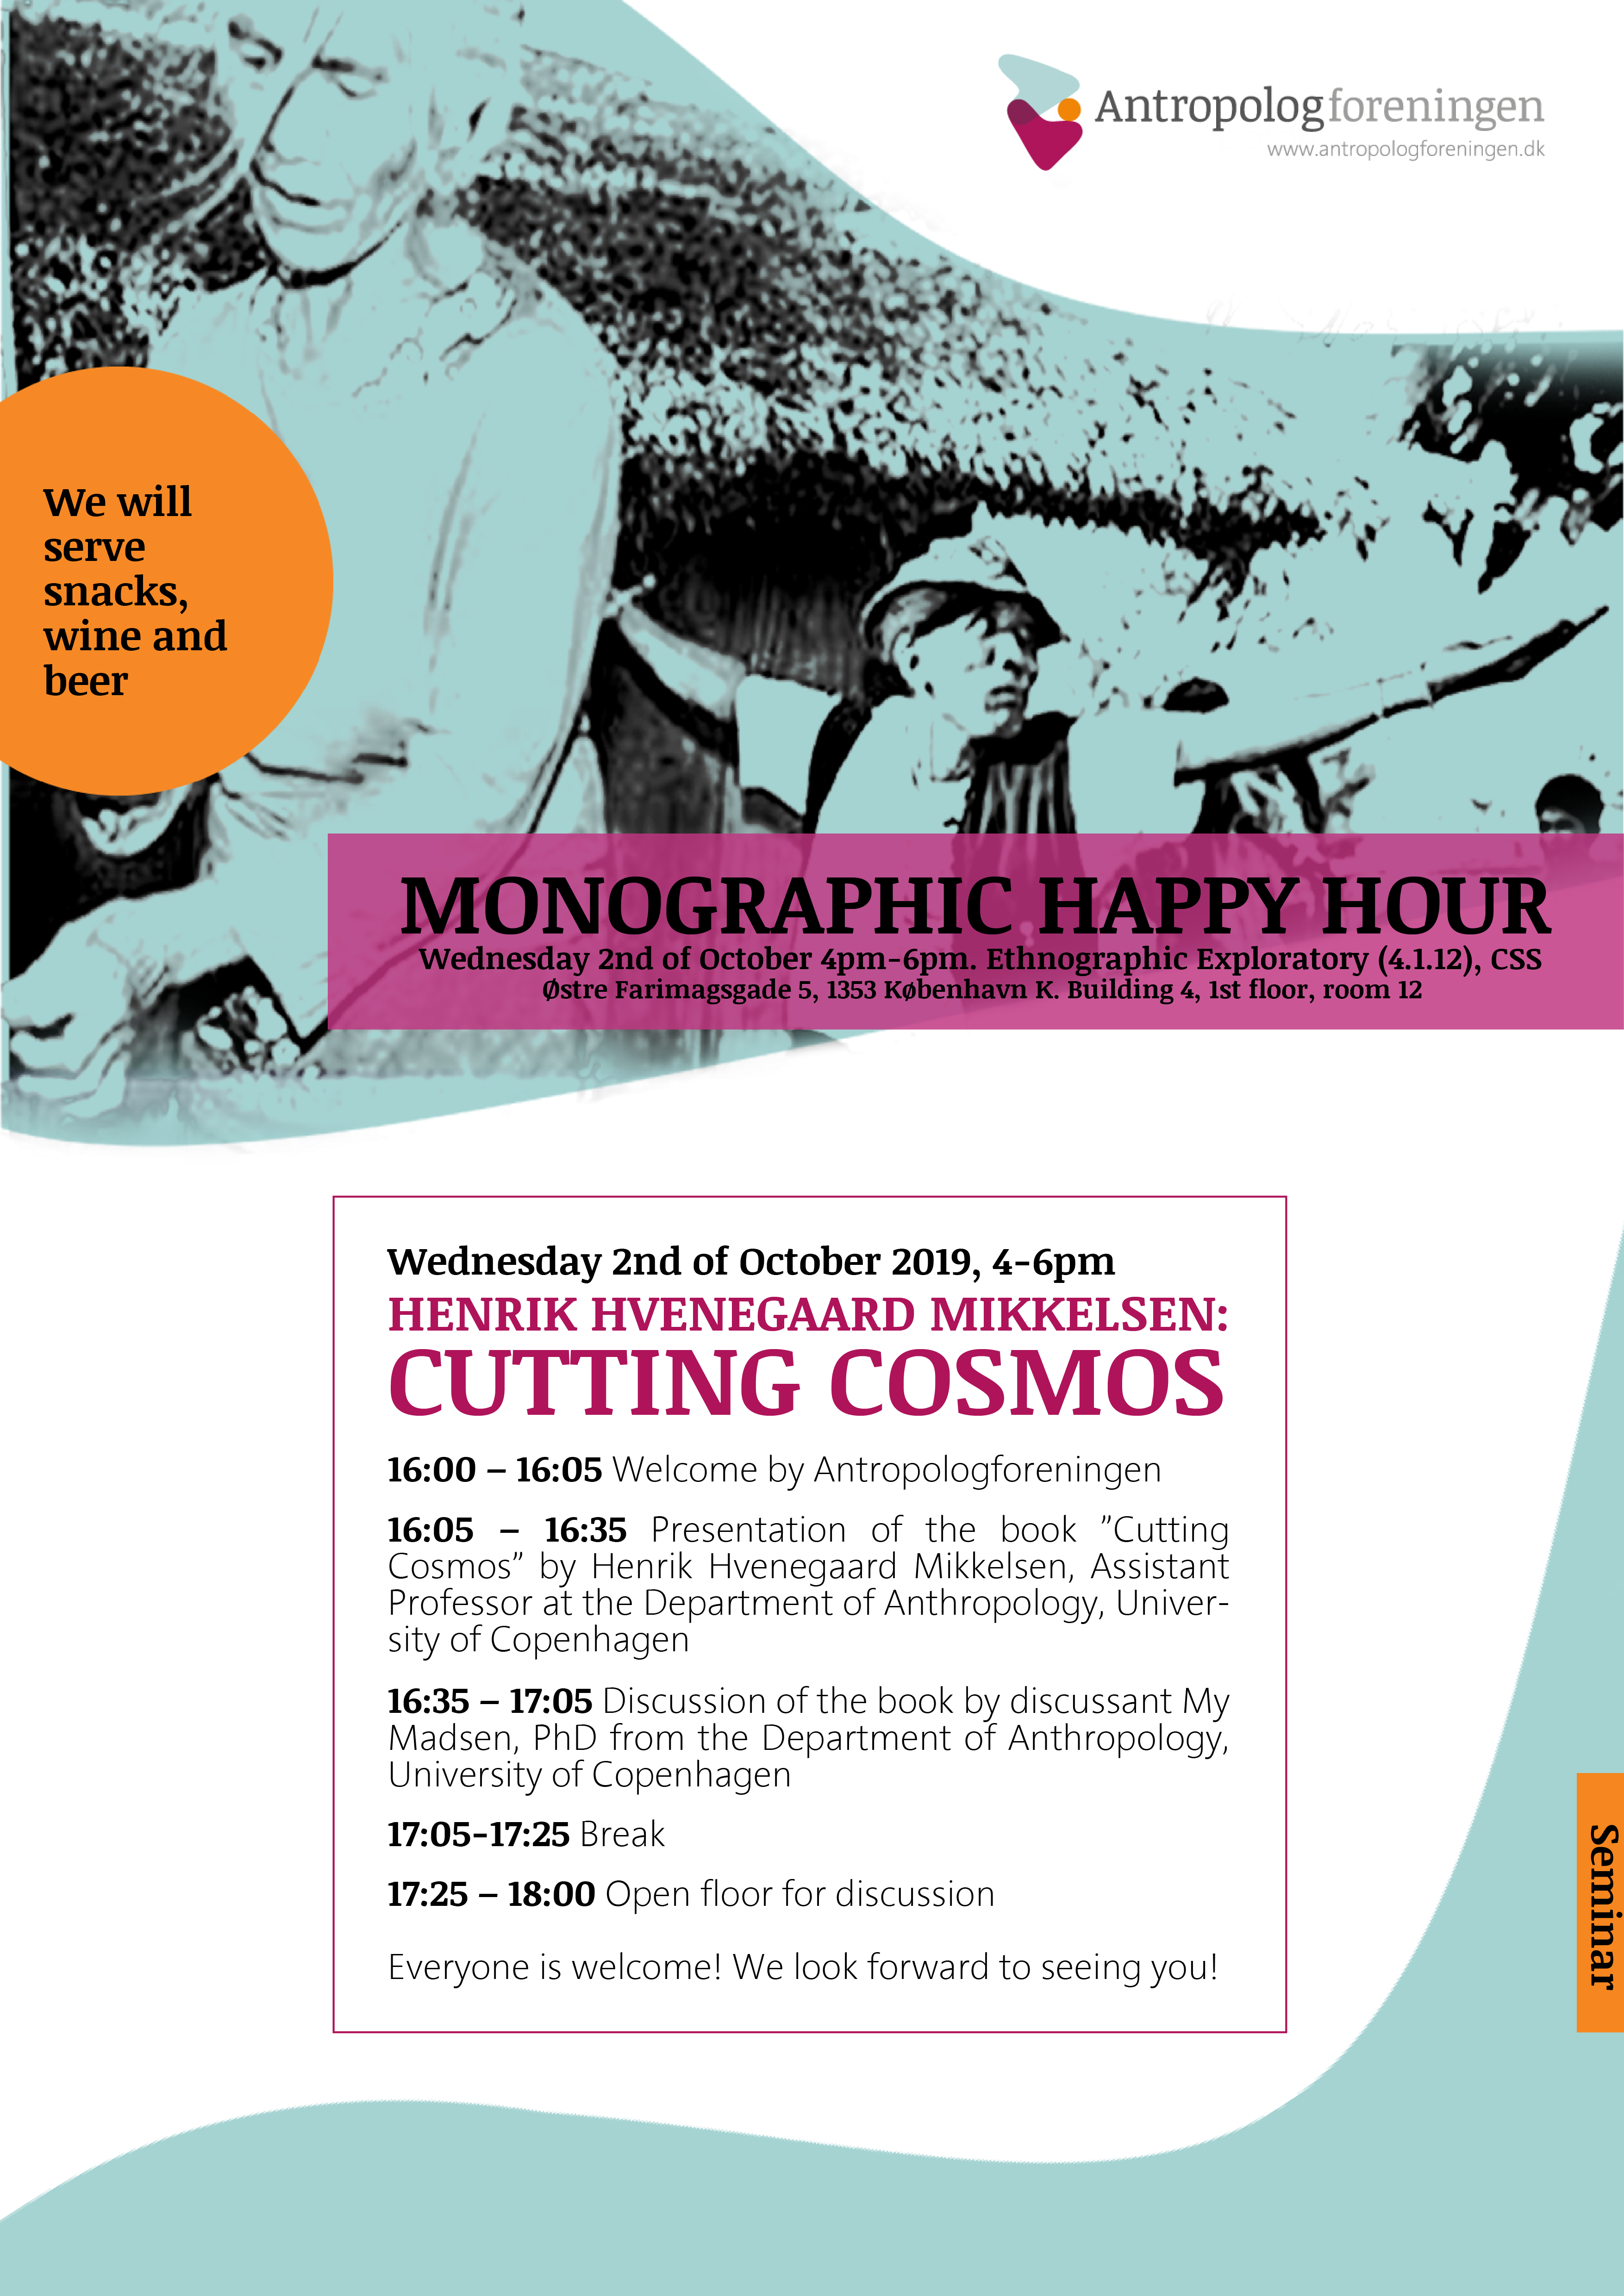 Monographic Happy Hour with Henrik Hvenegaard Mikkelsen